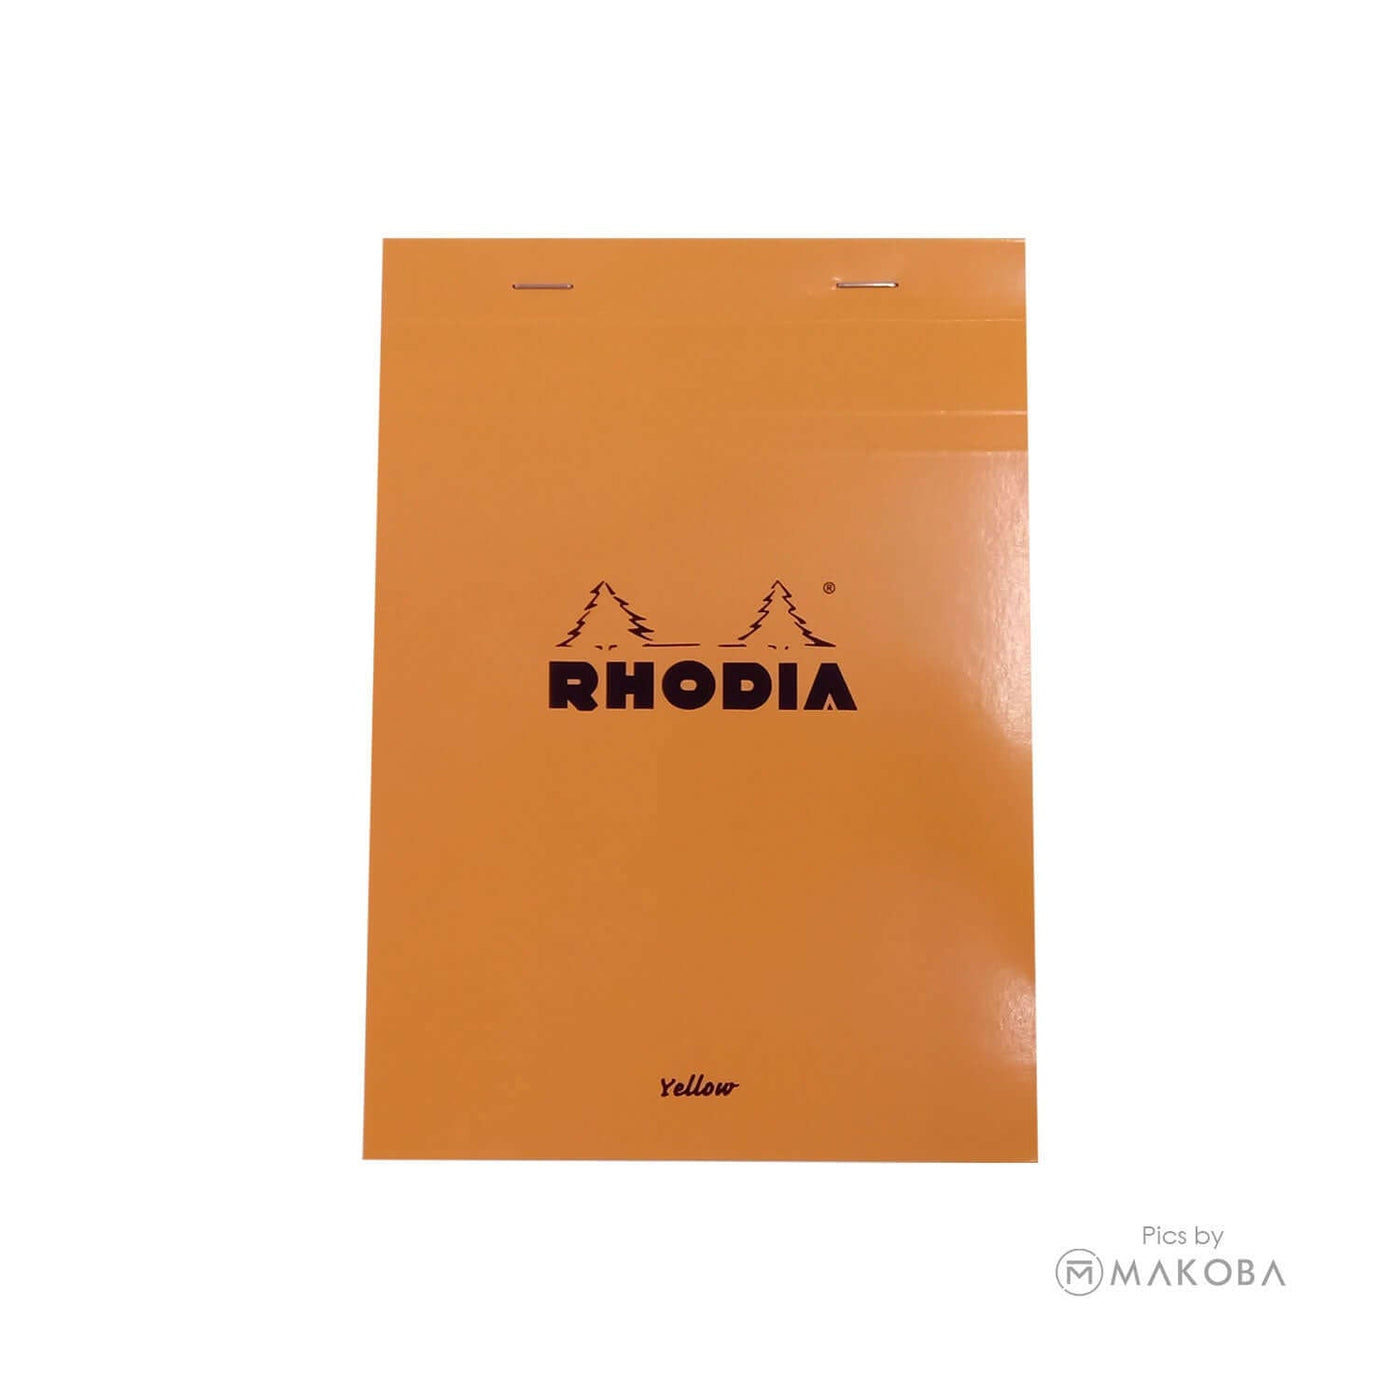 Rhodia Basics Notepad, Orange - Top Stapled 3